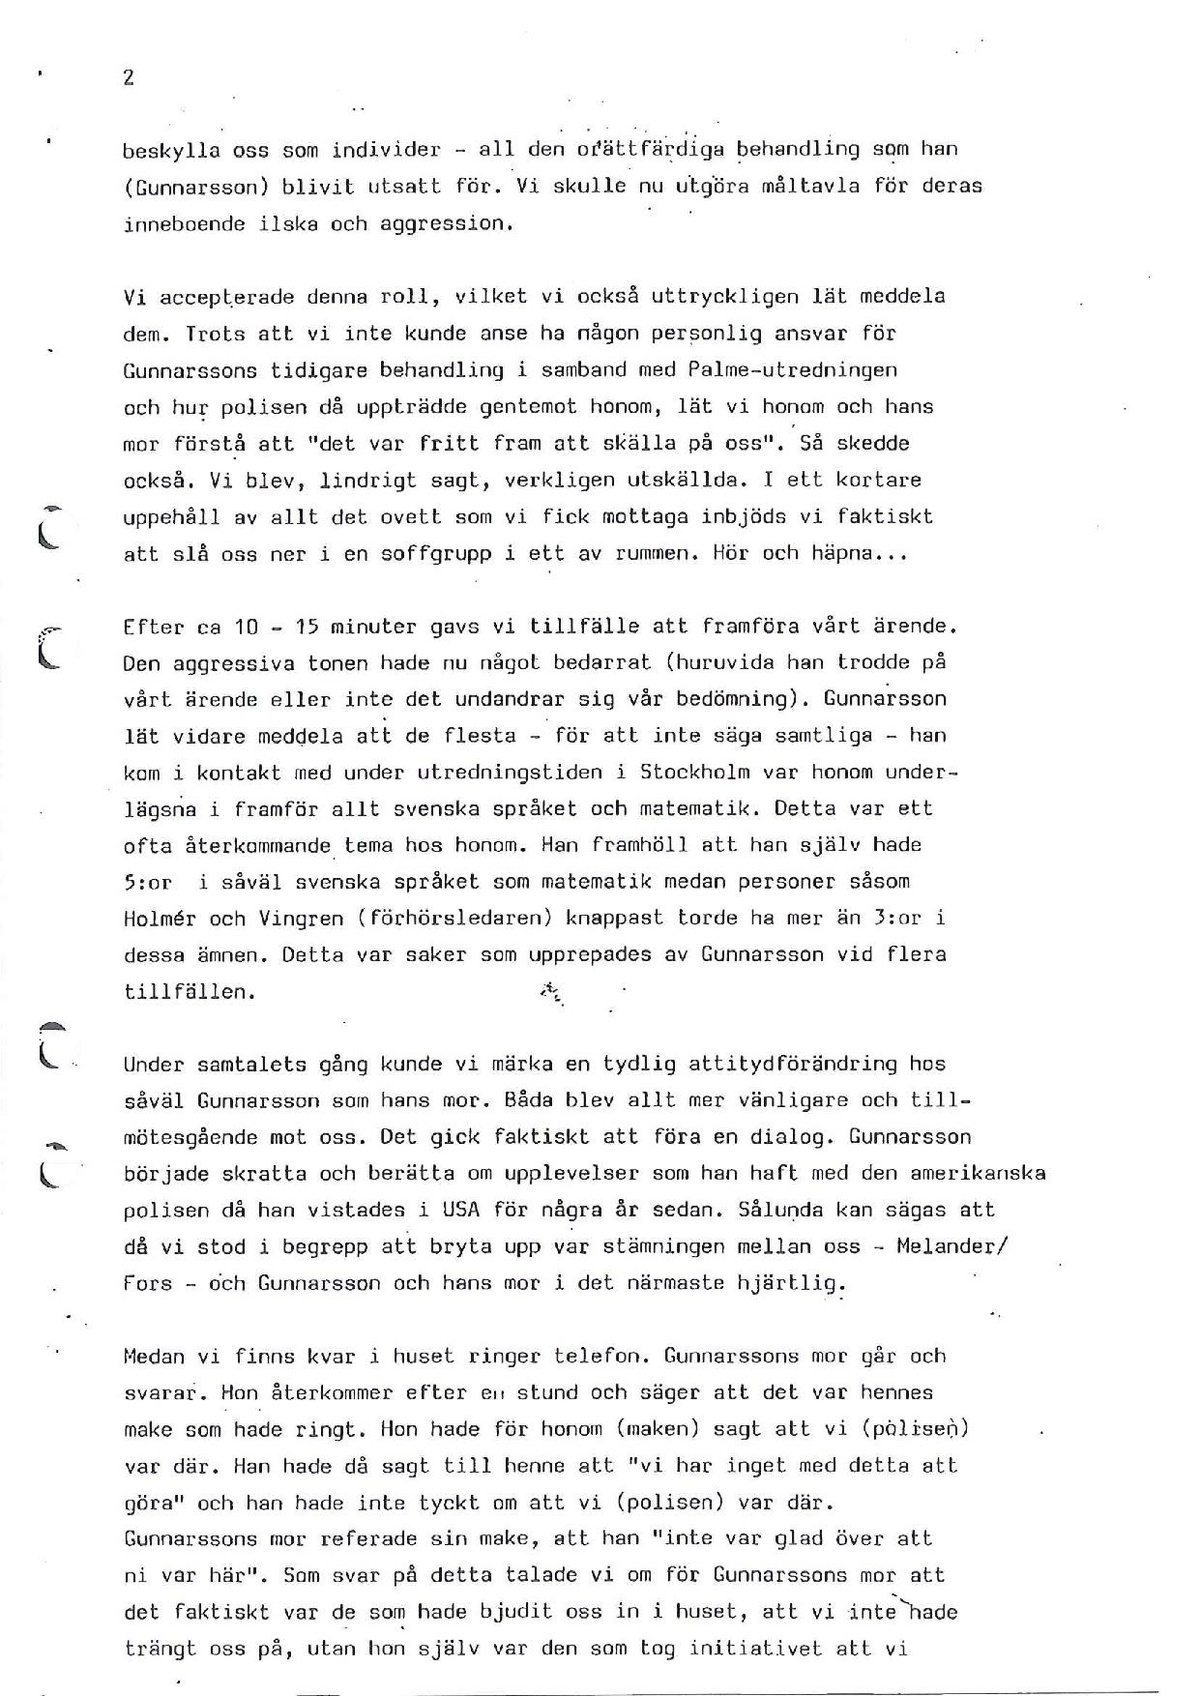 Pol-1987-11-02-N3000-00-K PM-Jan Melander besök hos VG.pdf